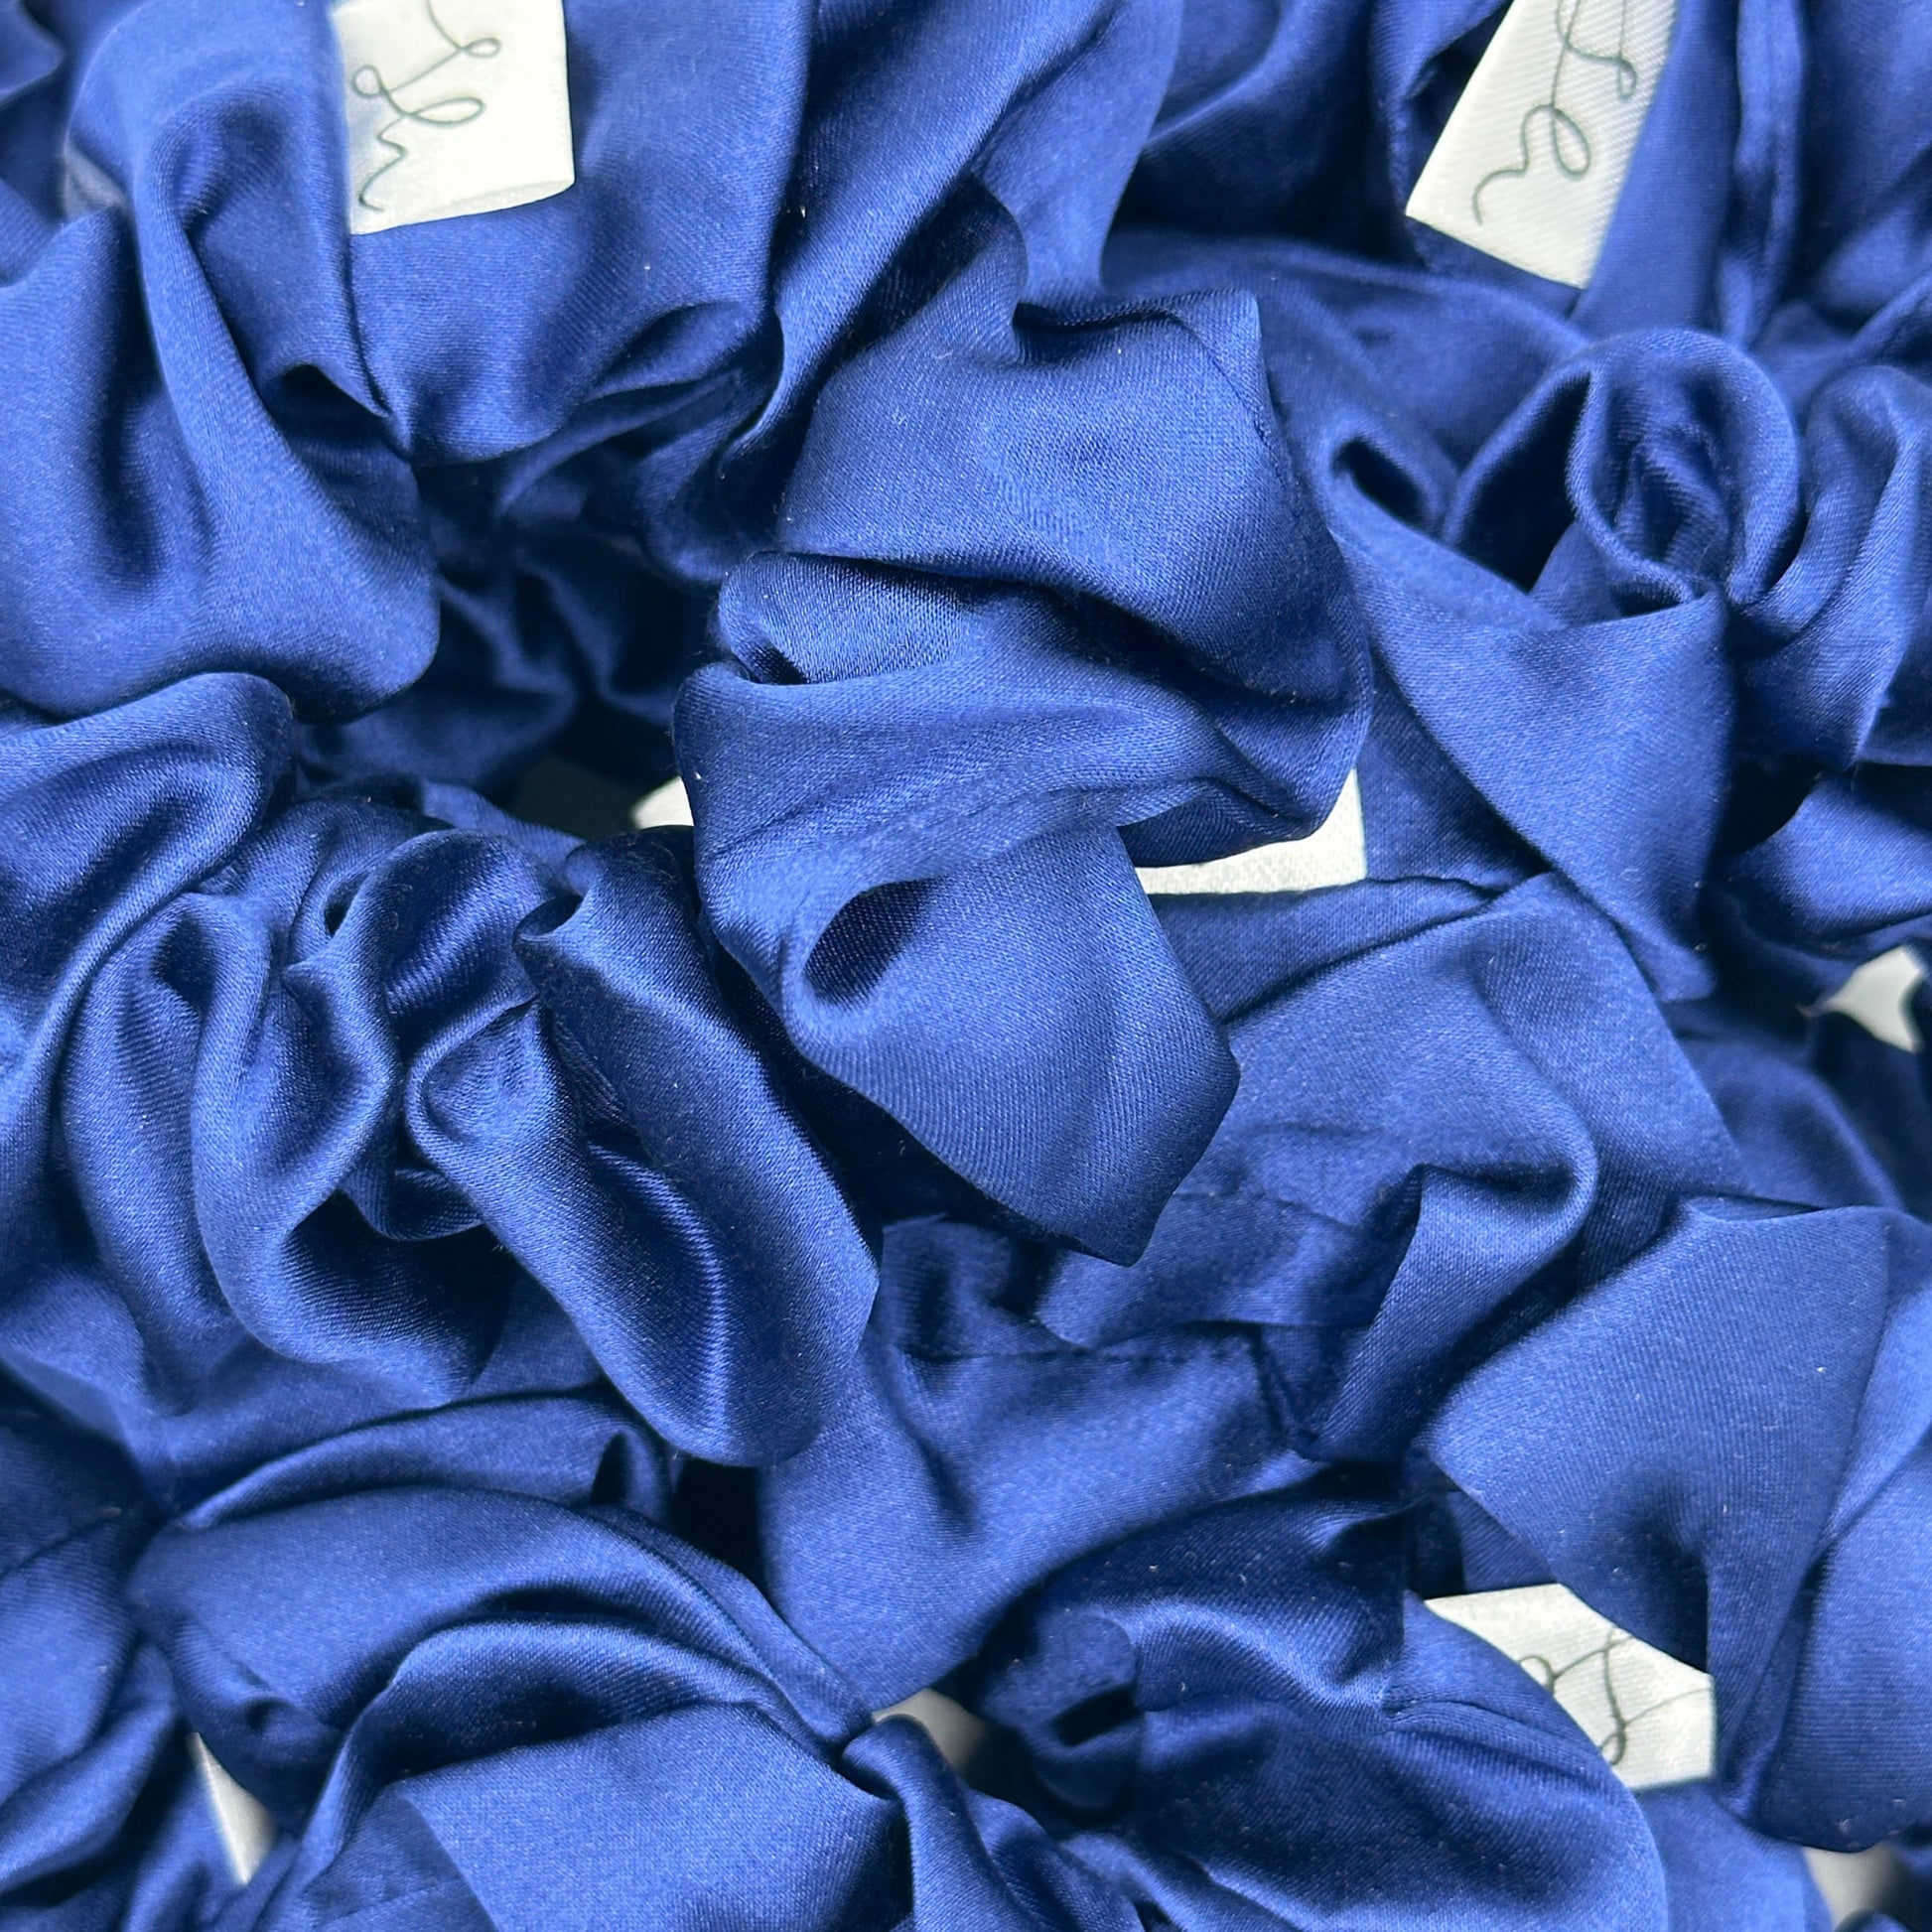 Síoda Silky 100% Mulberry Silk scrunchie size medium colour is Sapphire Blue